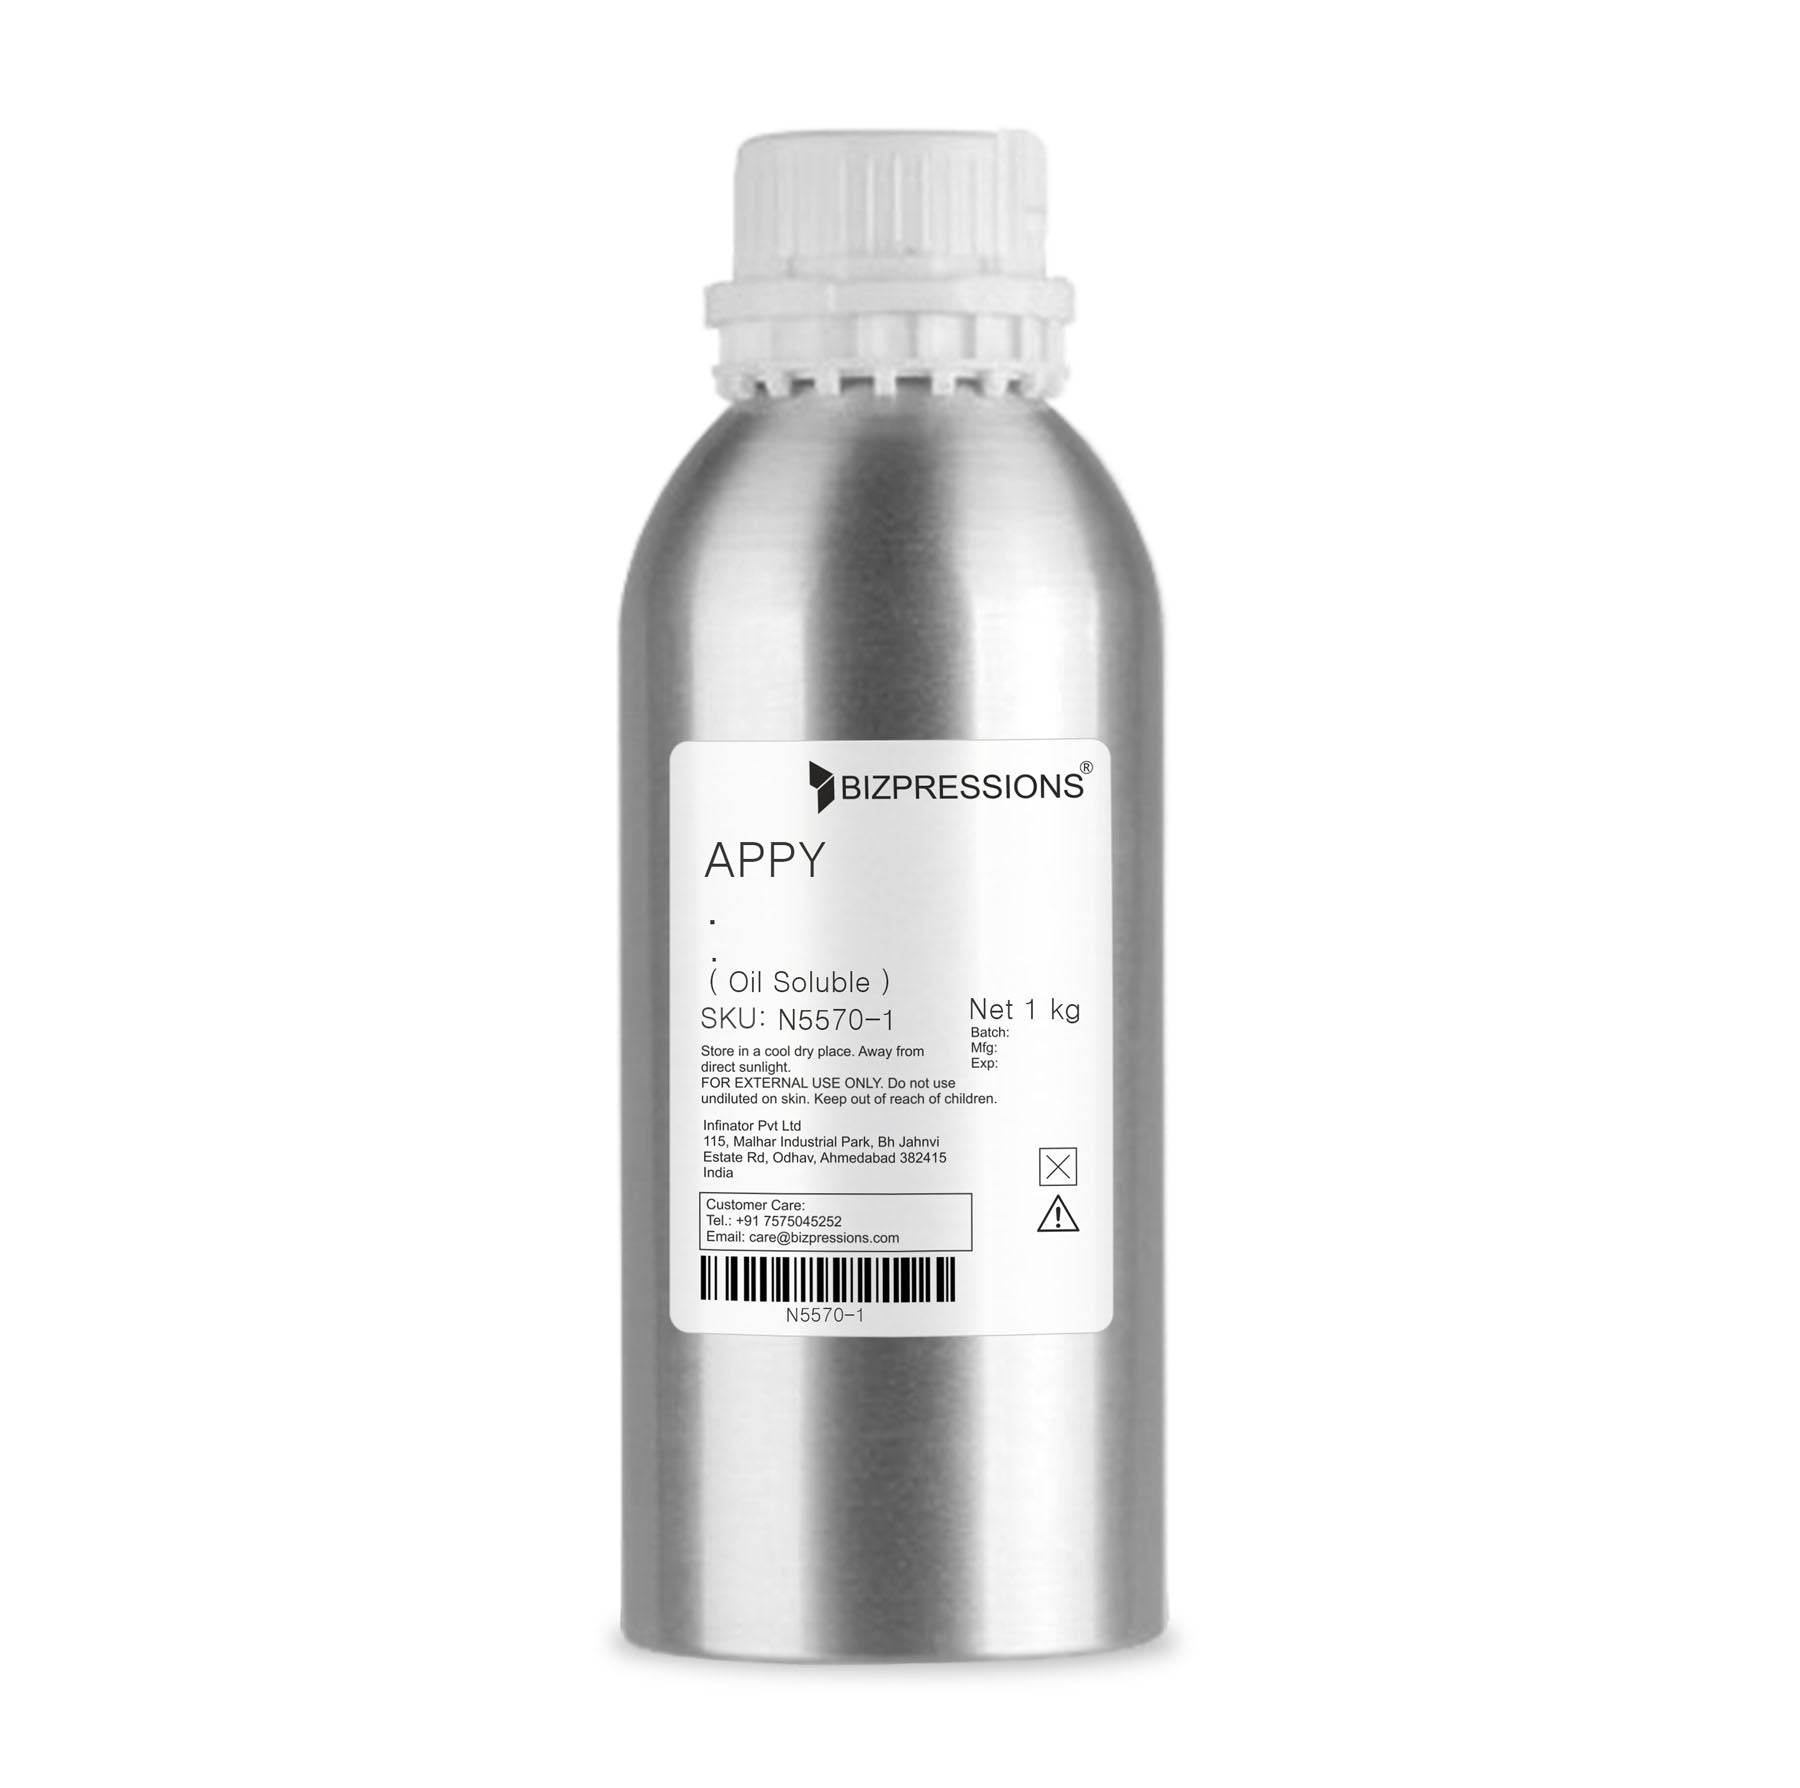 APPY - Fragrance ( Oil Soluble ) - 1 kg